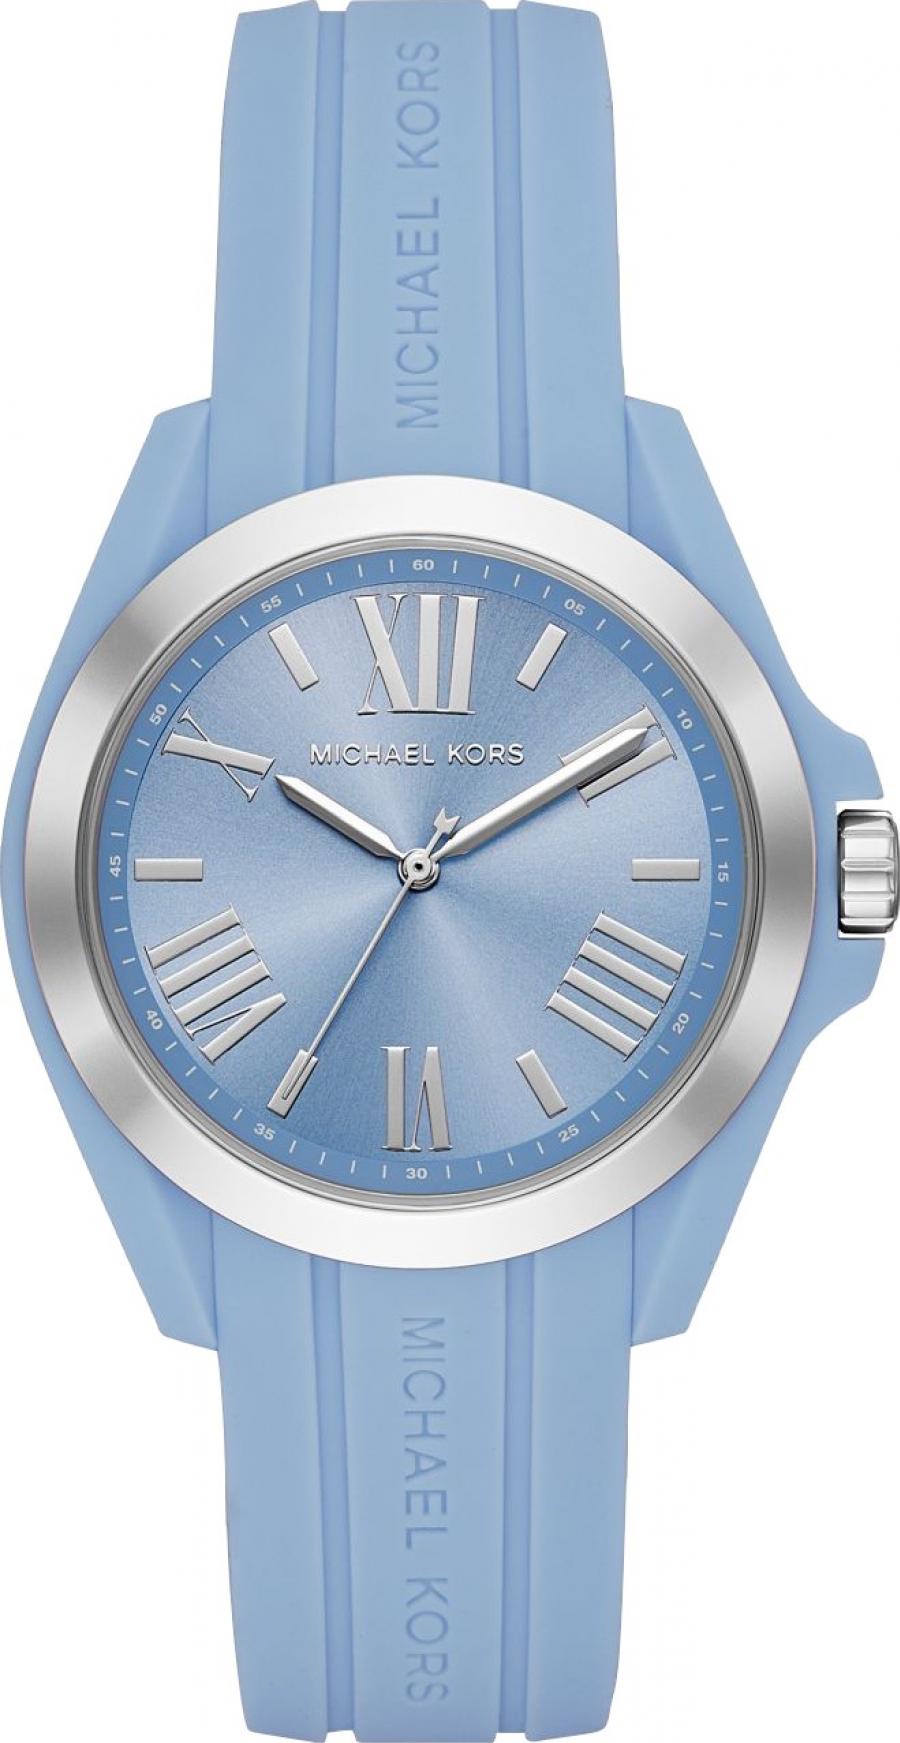 MK watch silicone blue